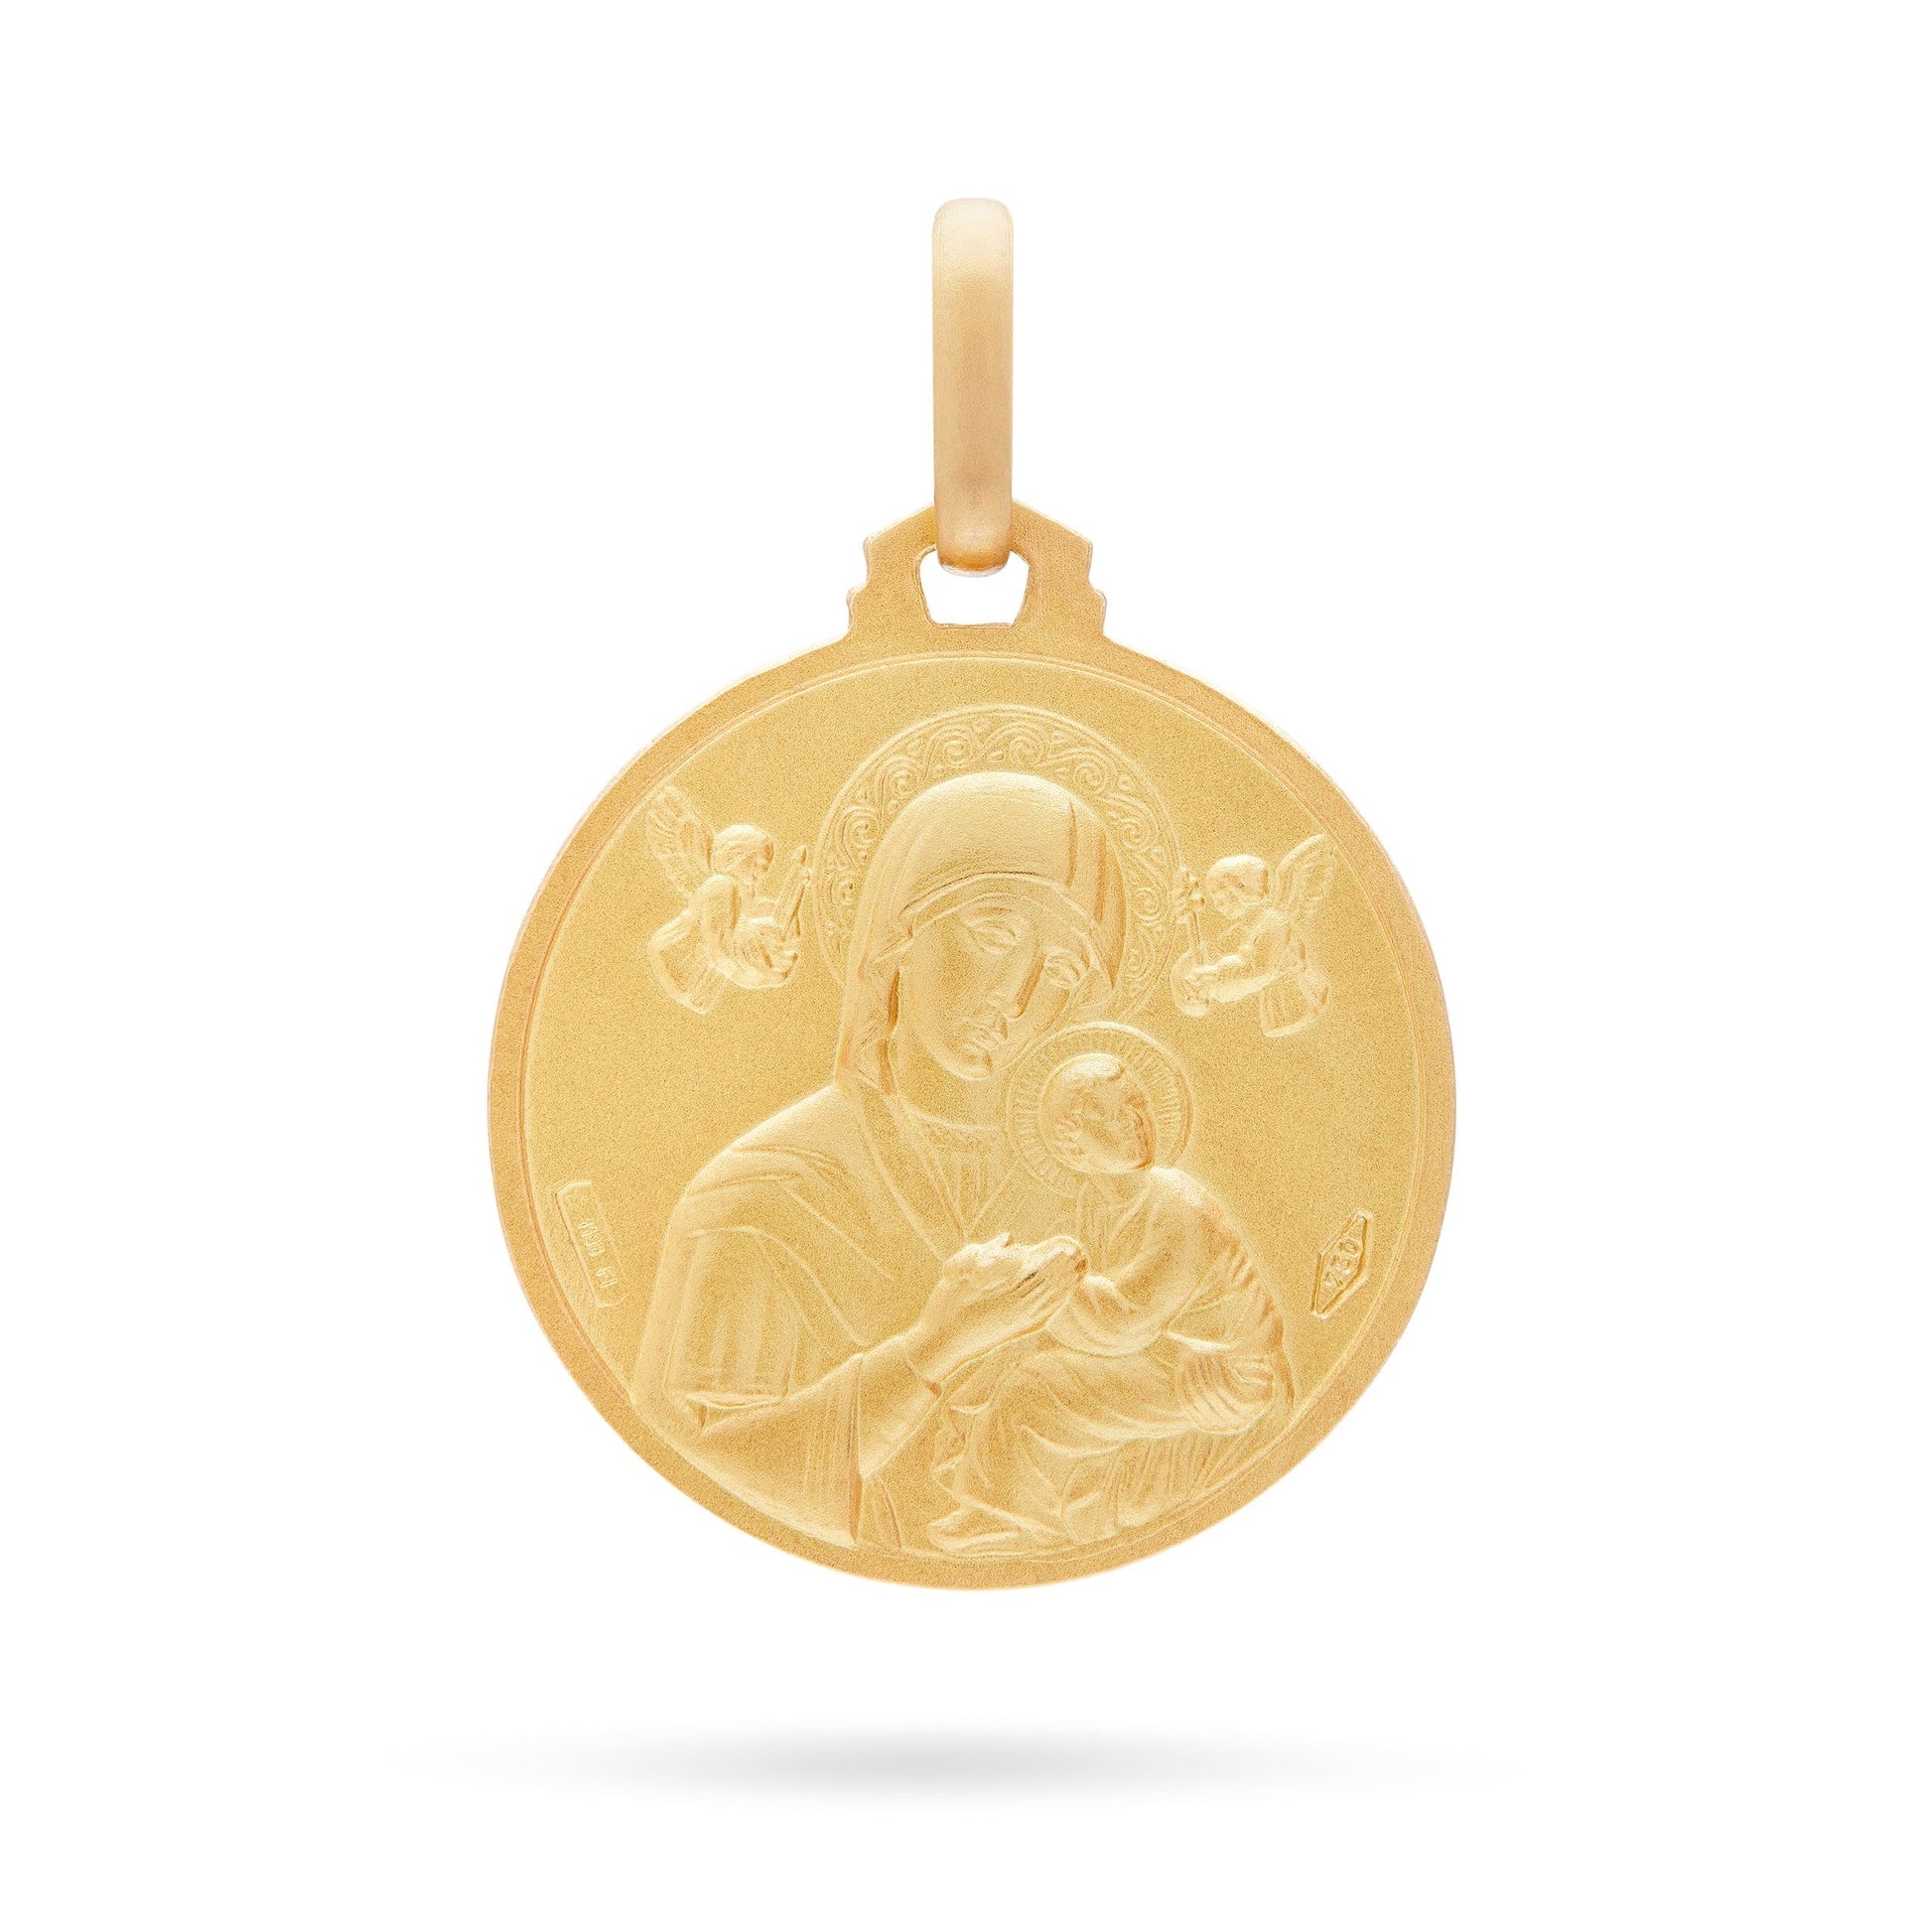 MONDO CATTOLICO Jewelry Double Sided Saint John Paul II Gold Medal